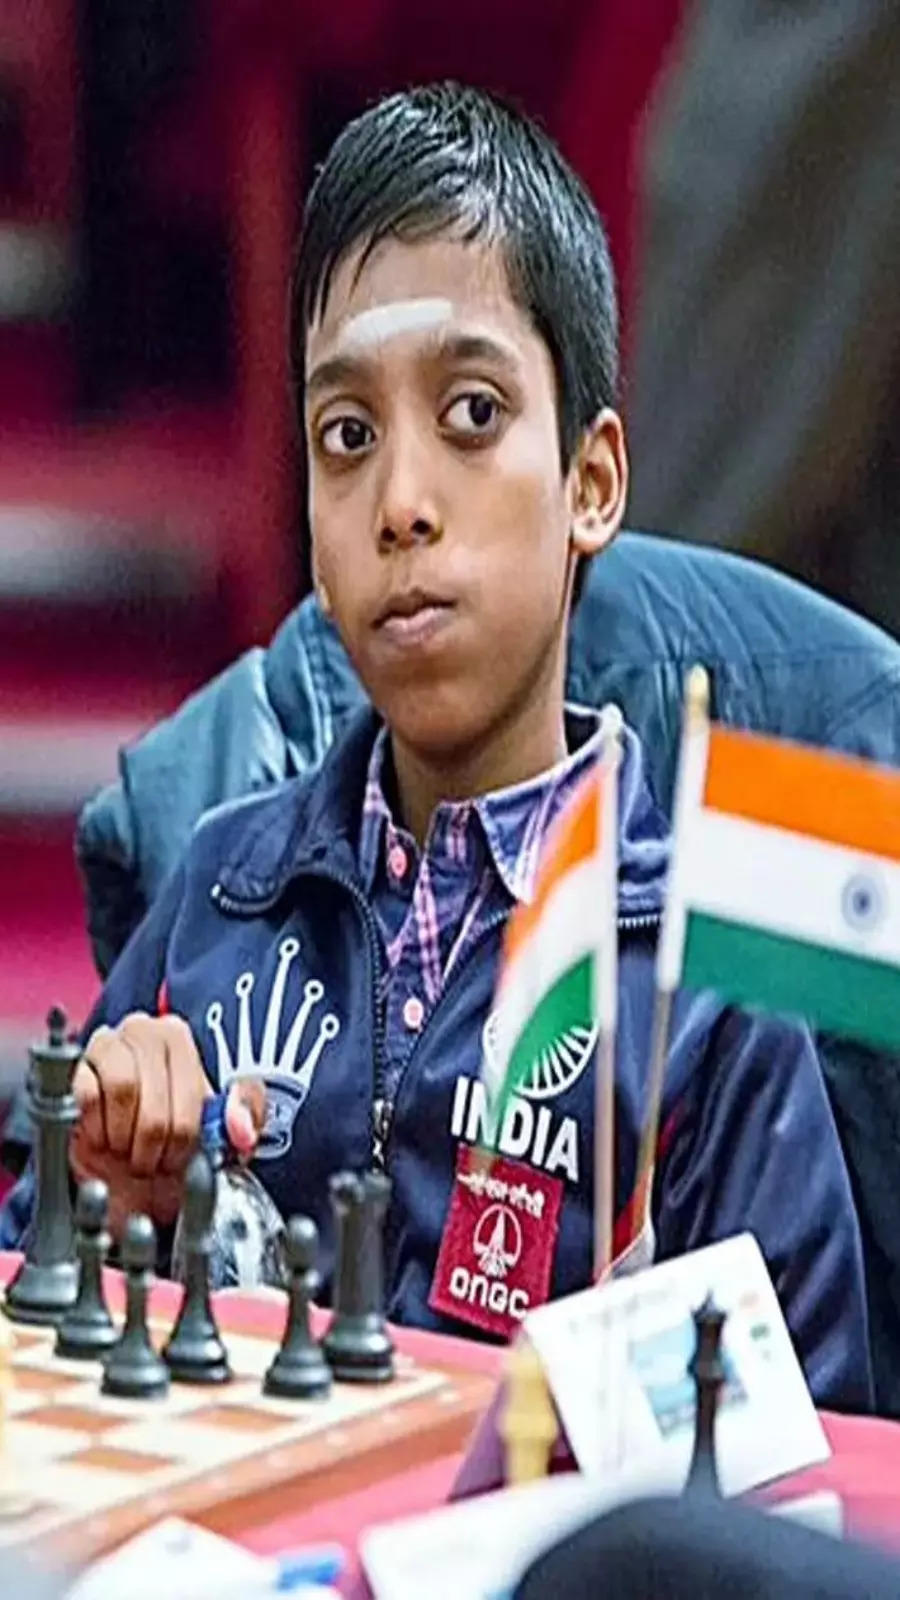 Indian teen chess player Praggnanandhaa beats world champion Carlsen